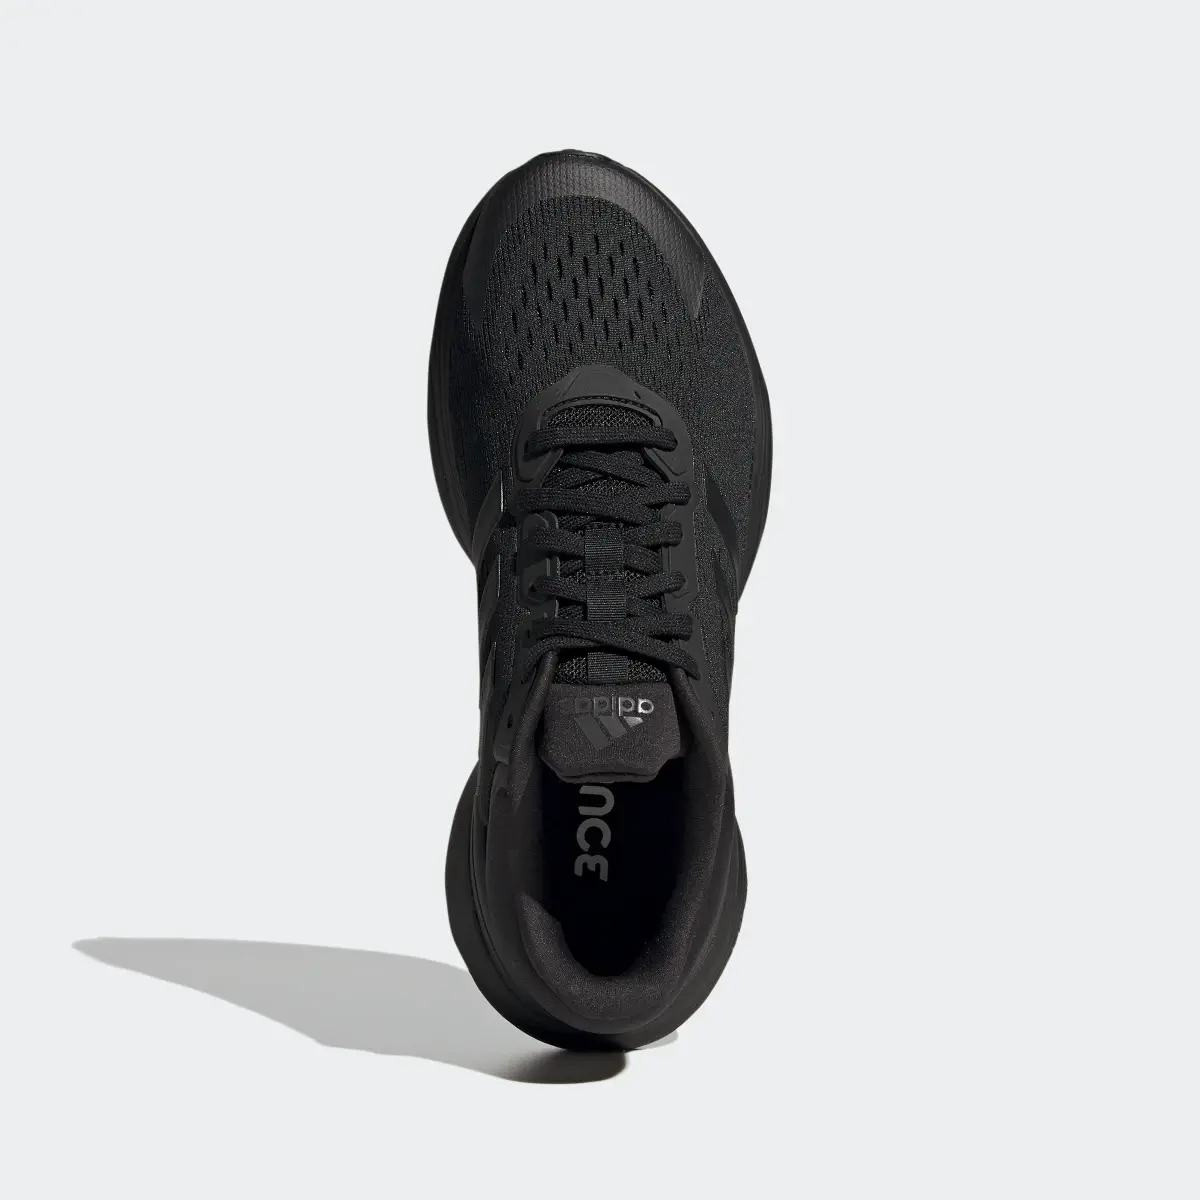 Adidas Chaussure Response Super 3.0. 3